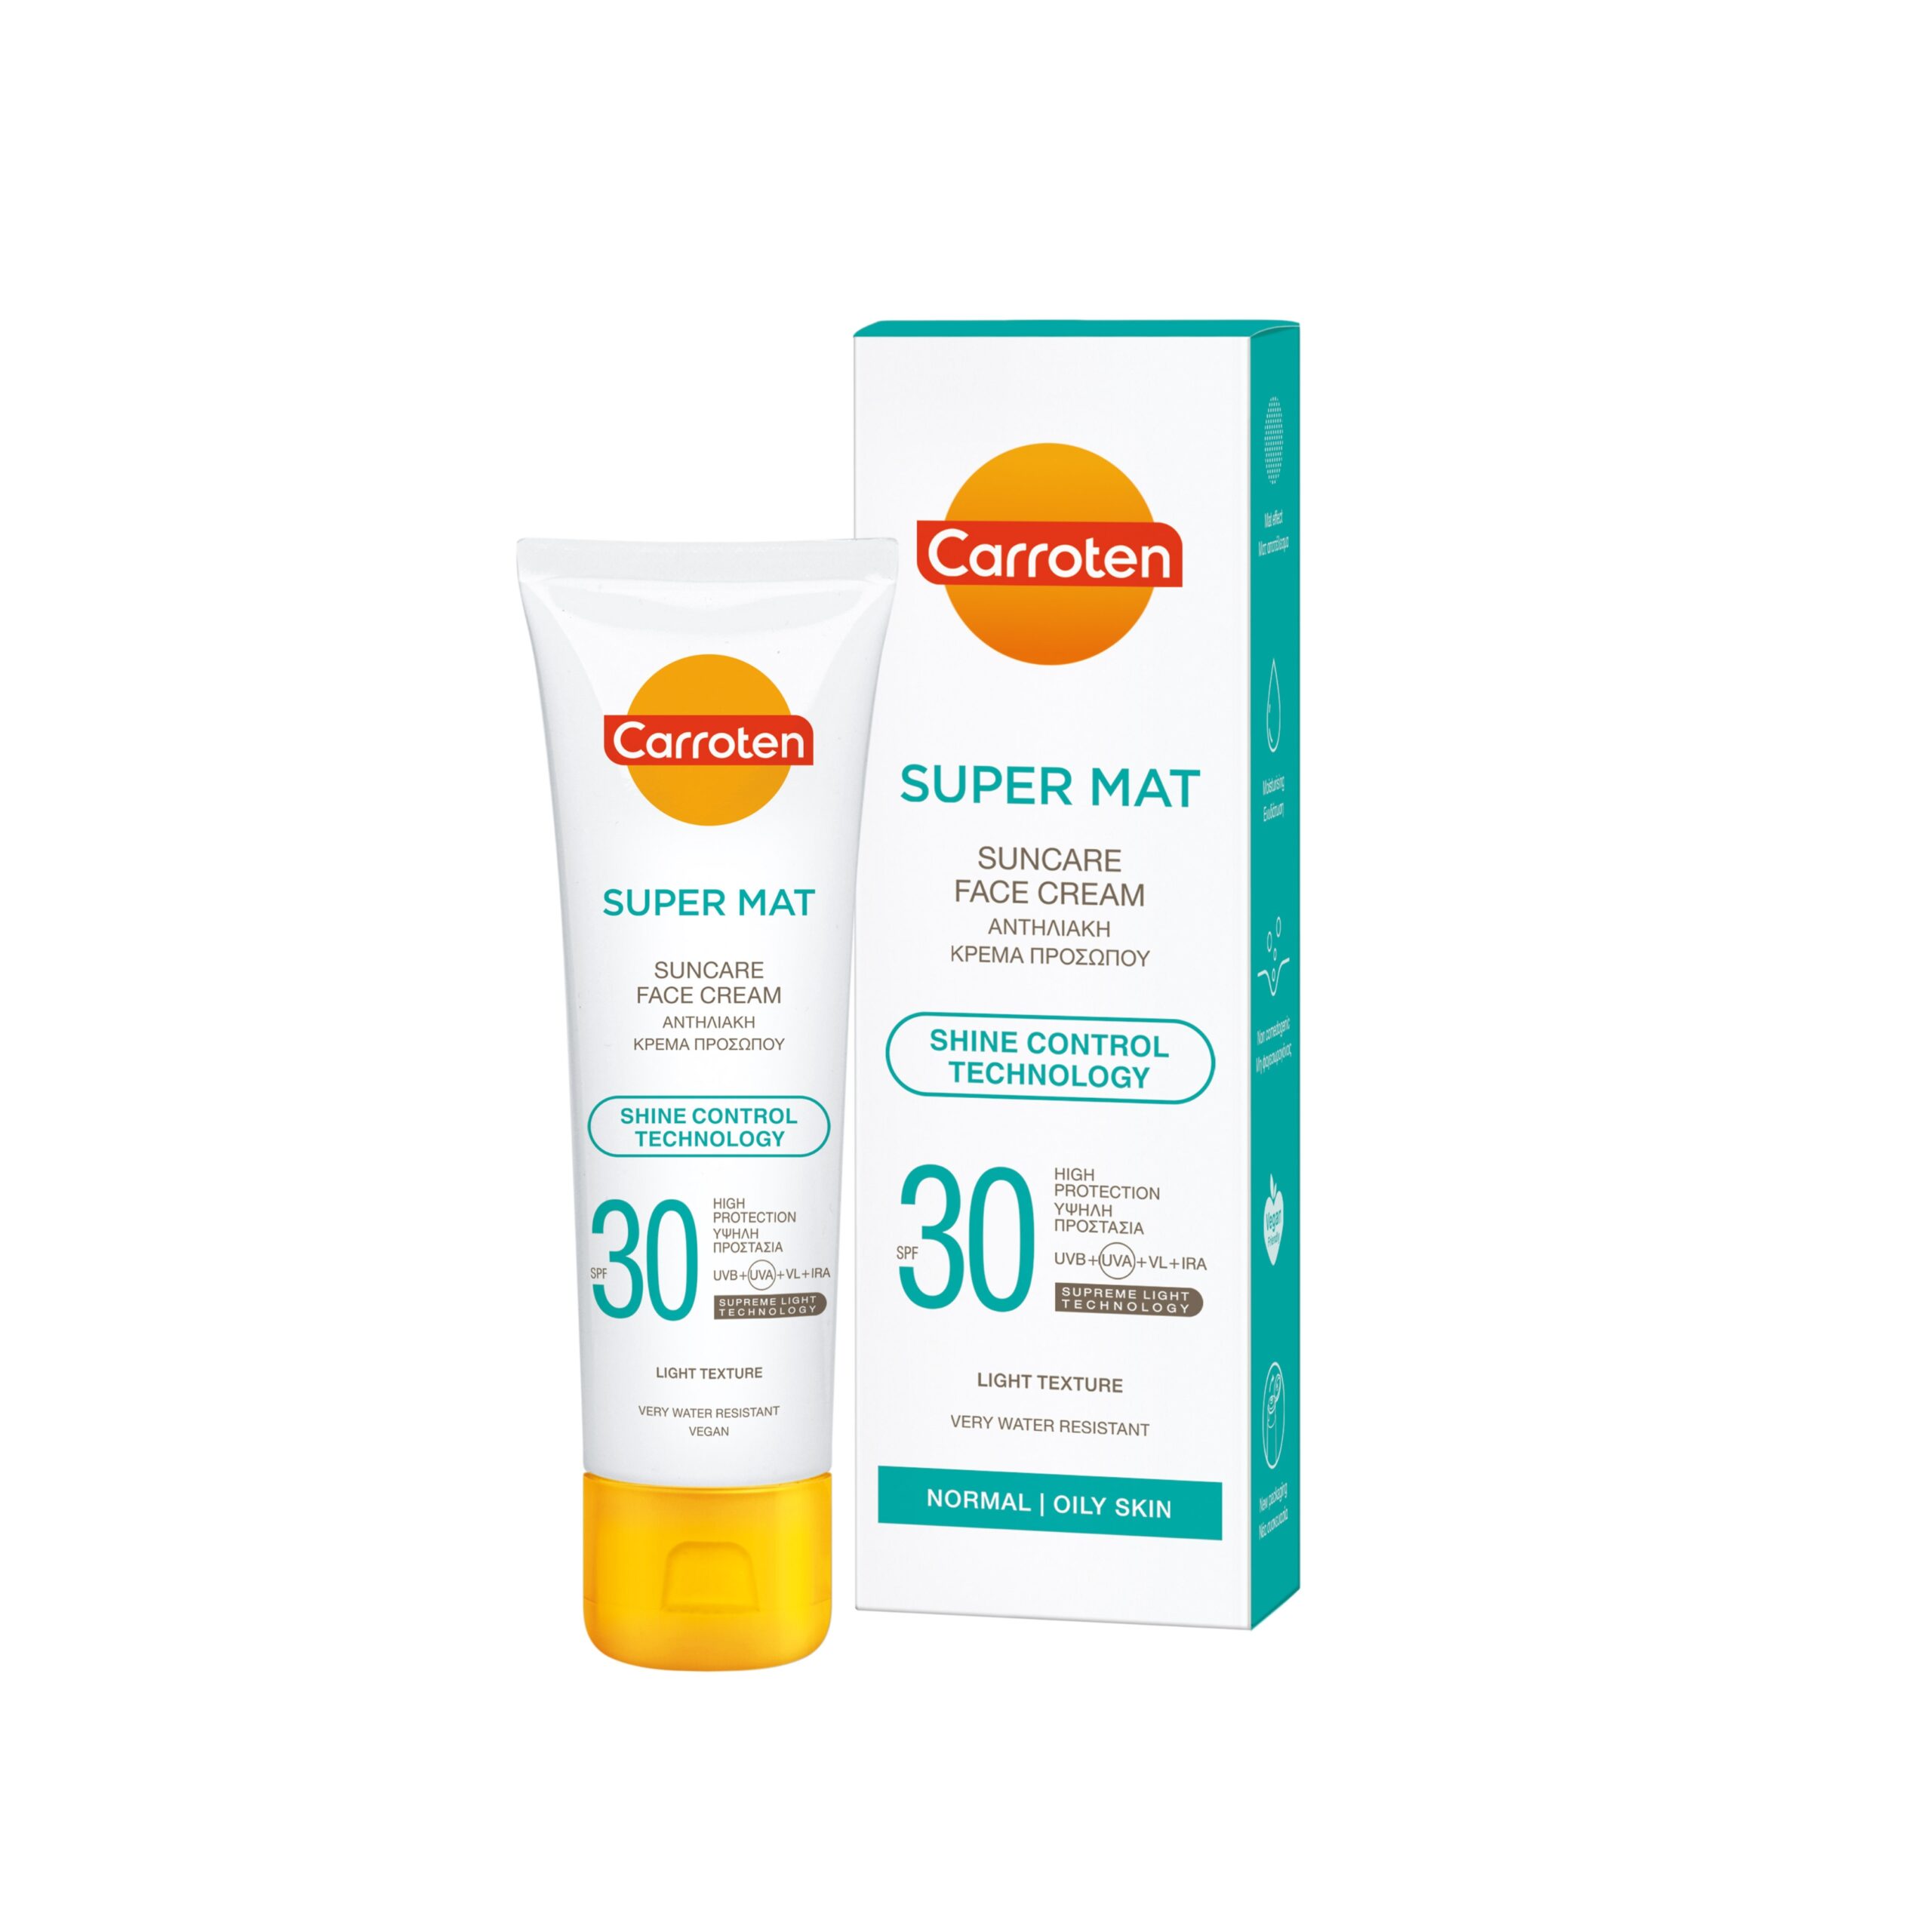 Carroten Super Mat Suncare Face Cream 50ml – SPF30